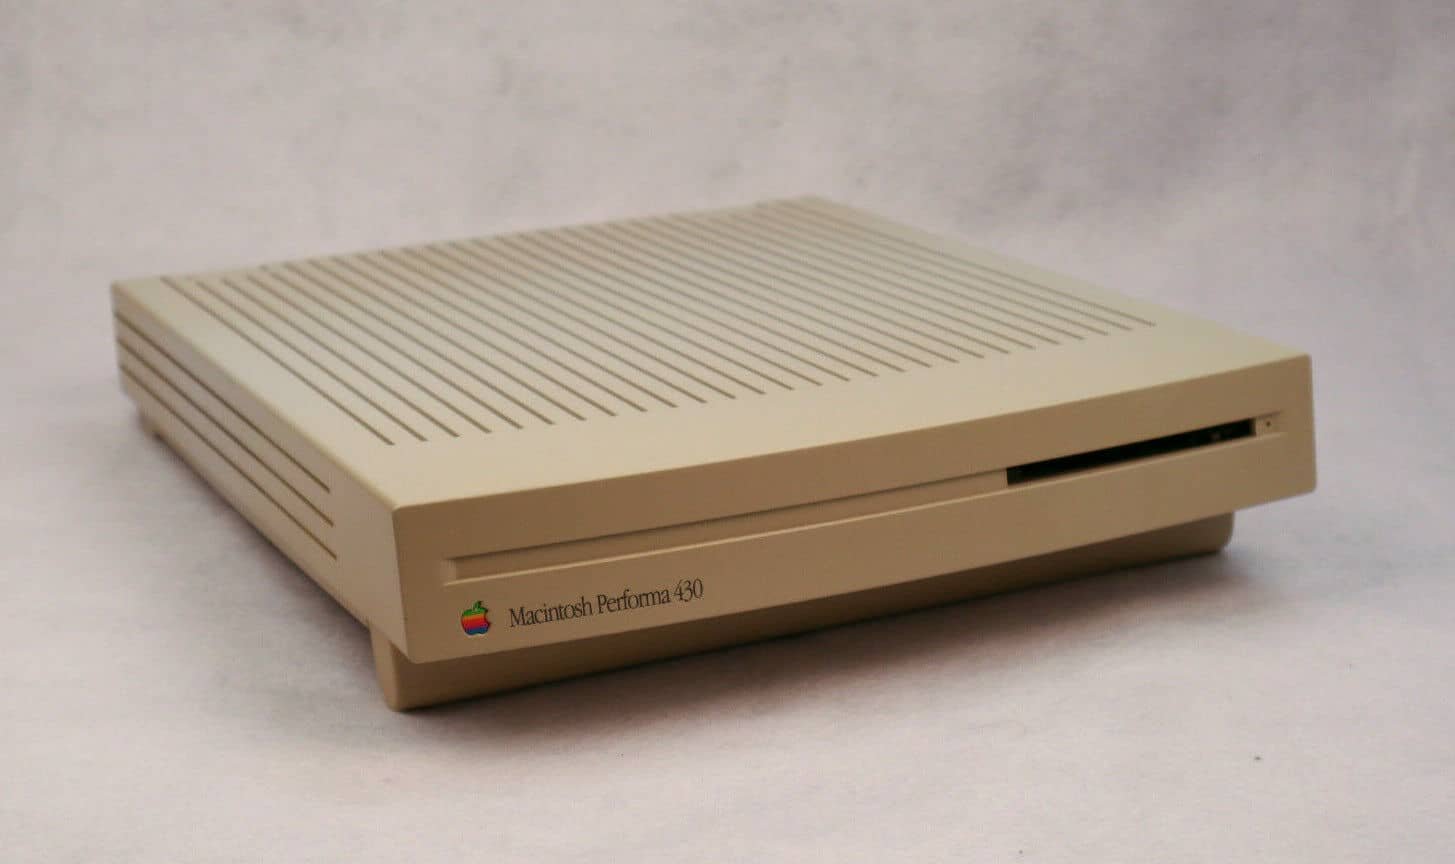 Macintosh Performa 430